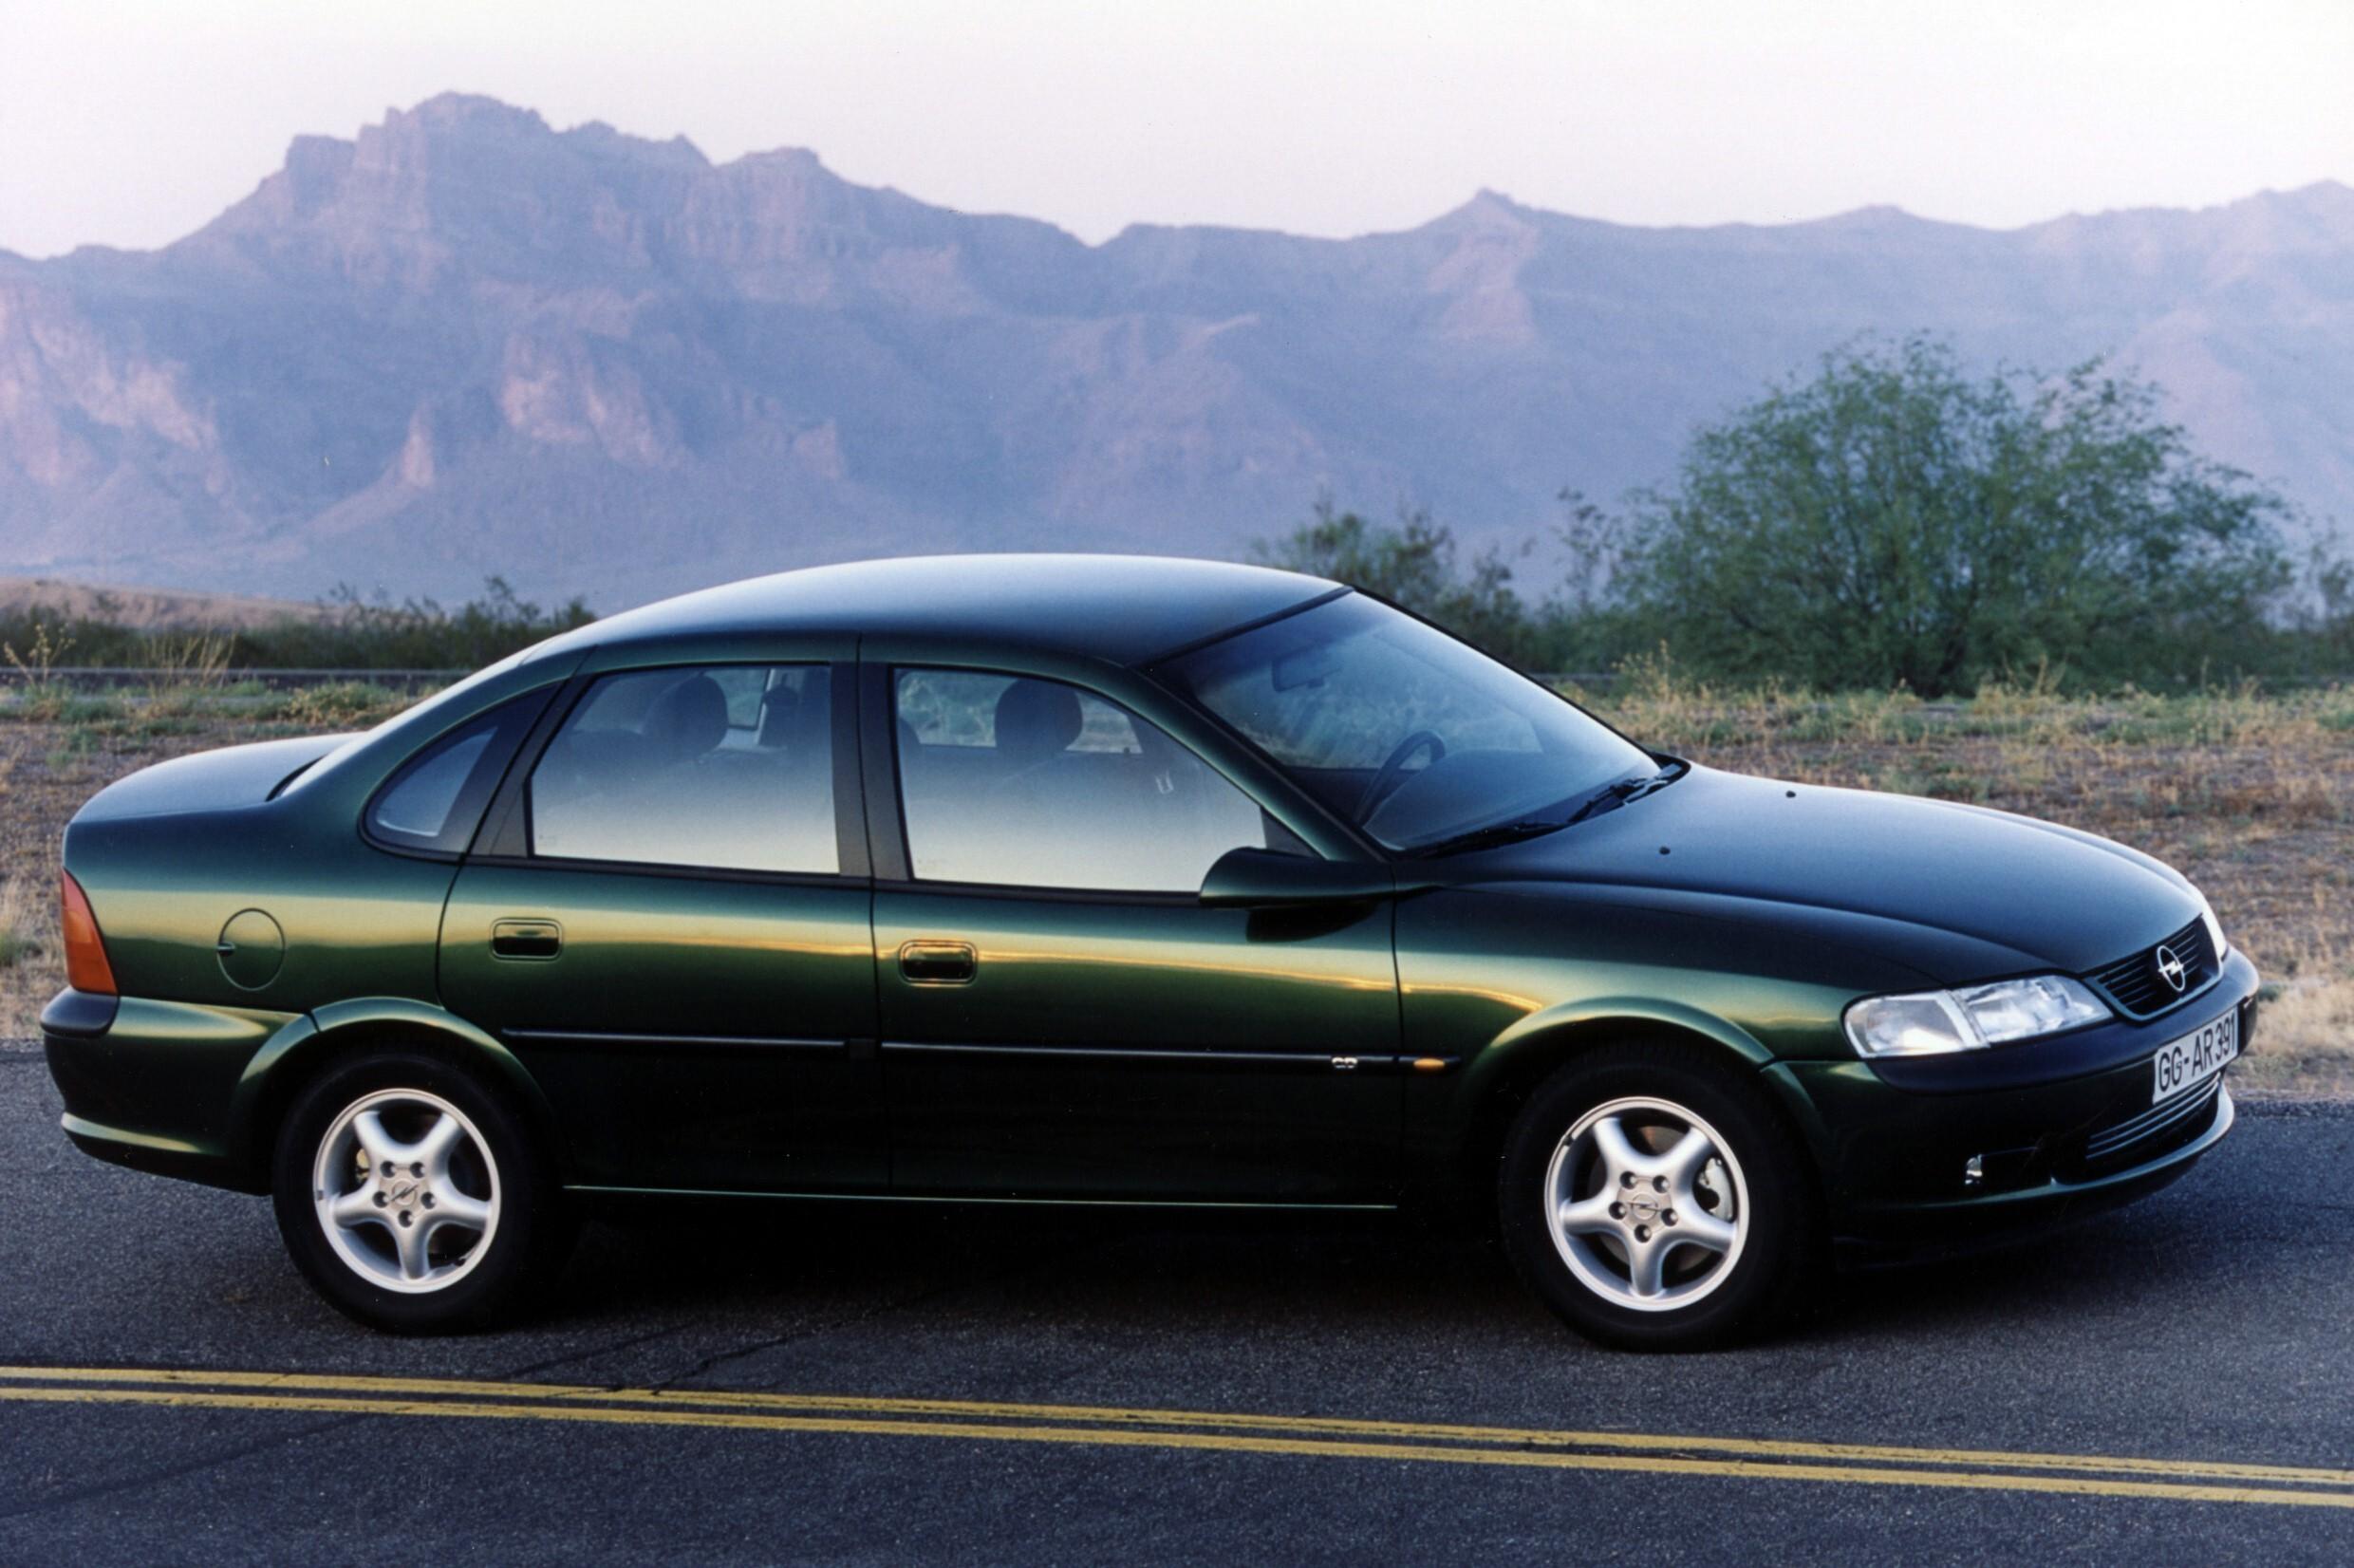 Новый опель вектра б. Opel Vectra b хэтчбек 1999. Opel Vectra, 1996 седан. Опель Вектра б 1.6 1999. Опель Вектра седан 1996.